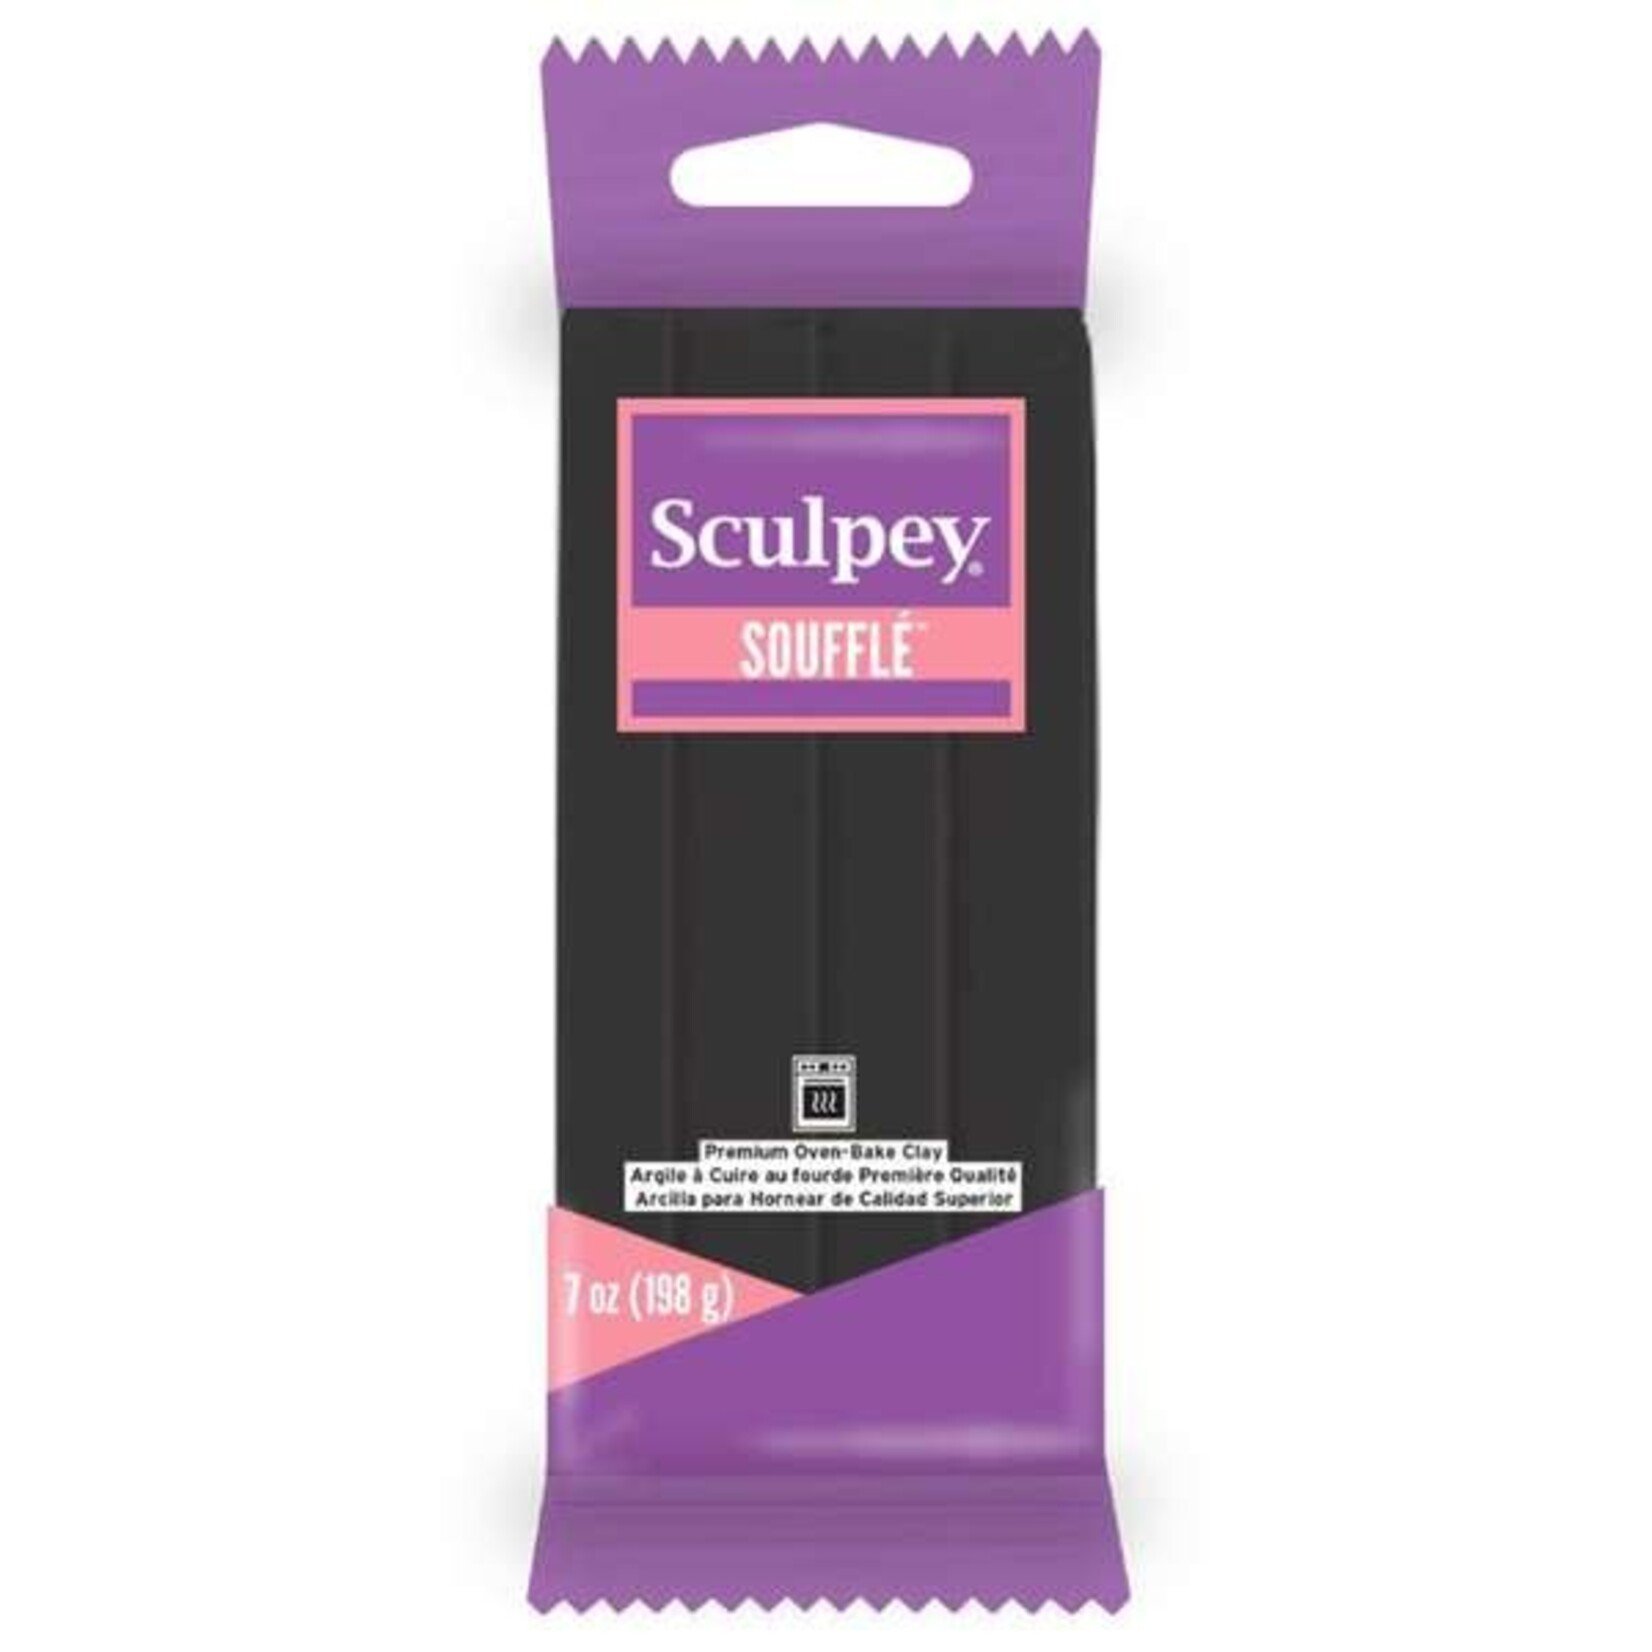 Sculpey Sculpey Souffle Poppy Seed 7 oz